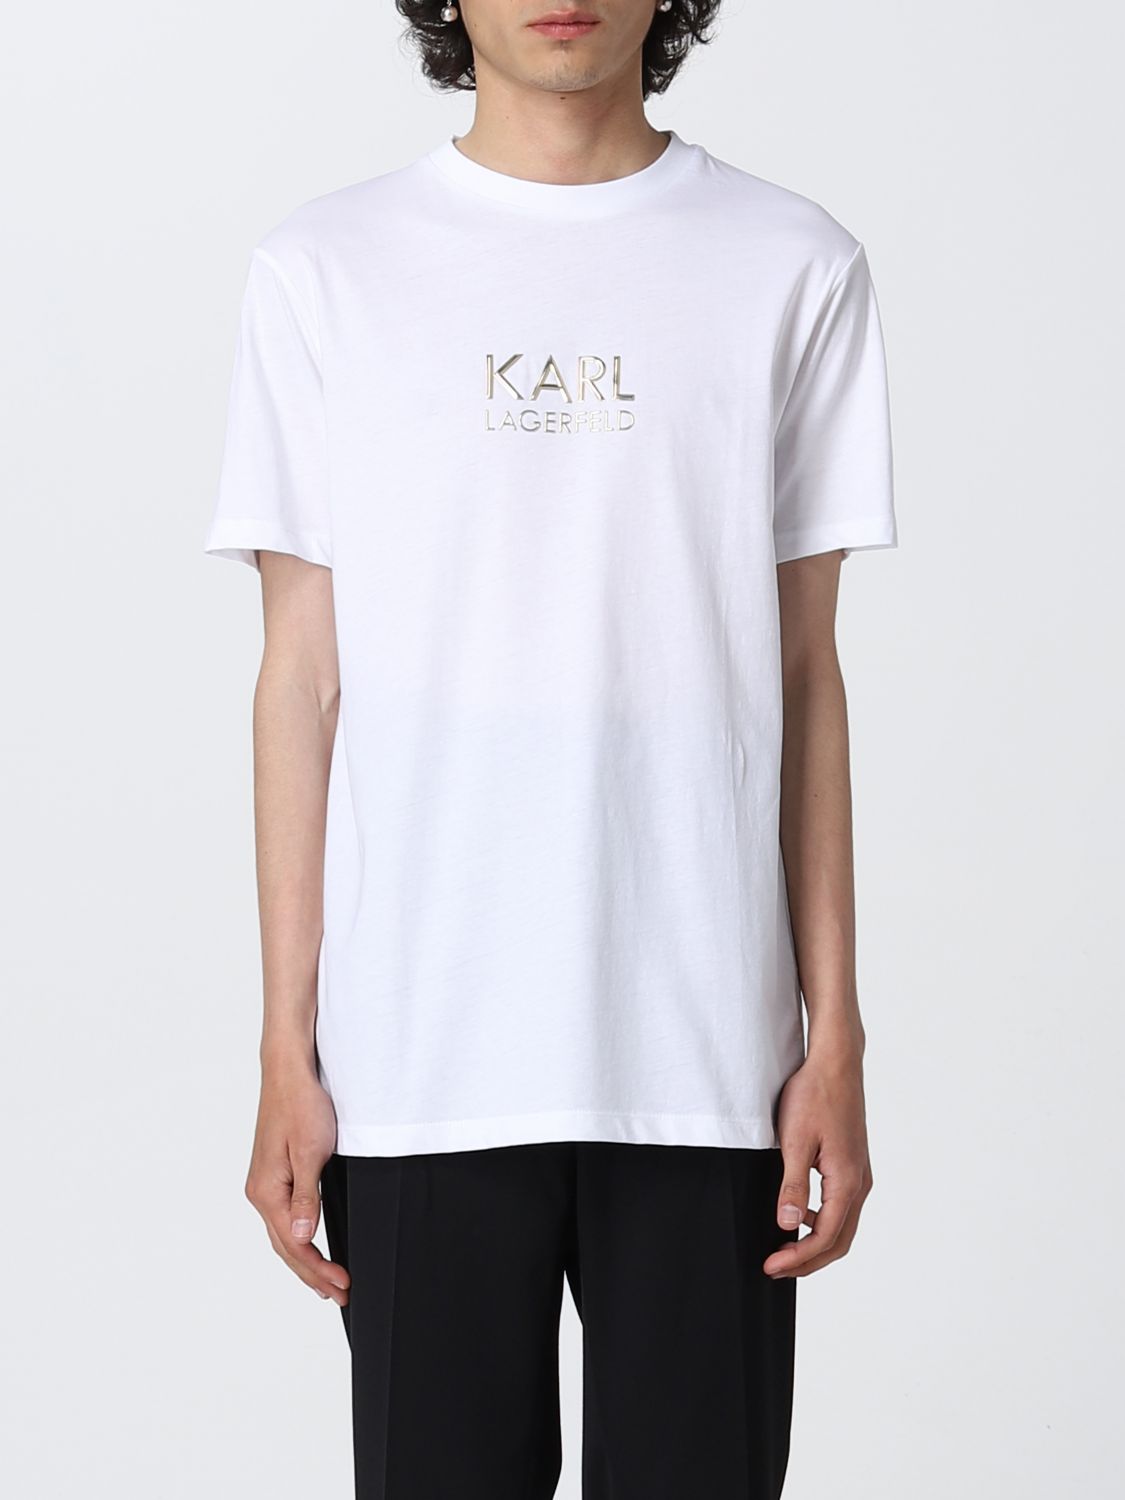 KARL LAGERFELD: t-shirt for man - White | Karl Lagerfeld t-shirt online on GIGLIO.COM